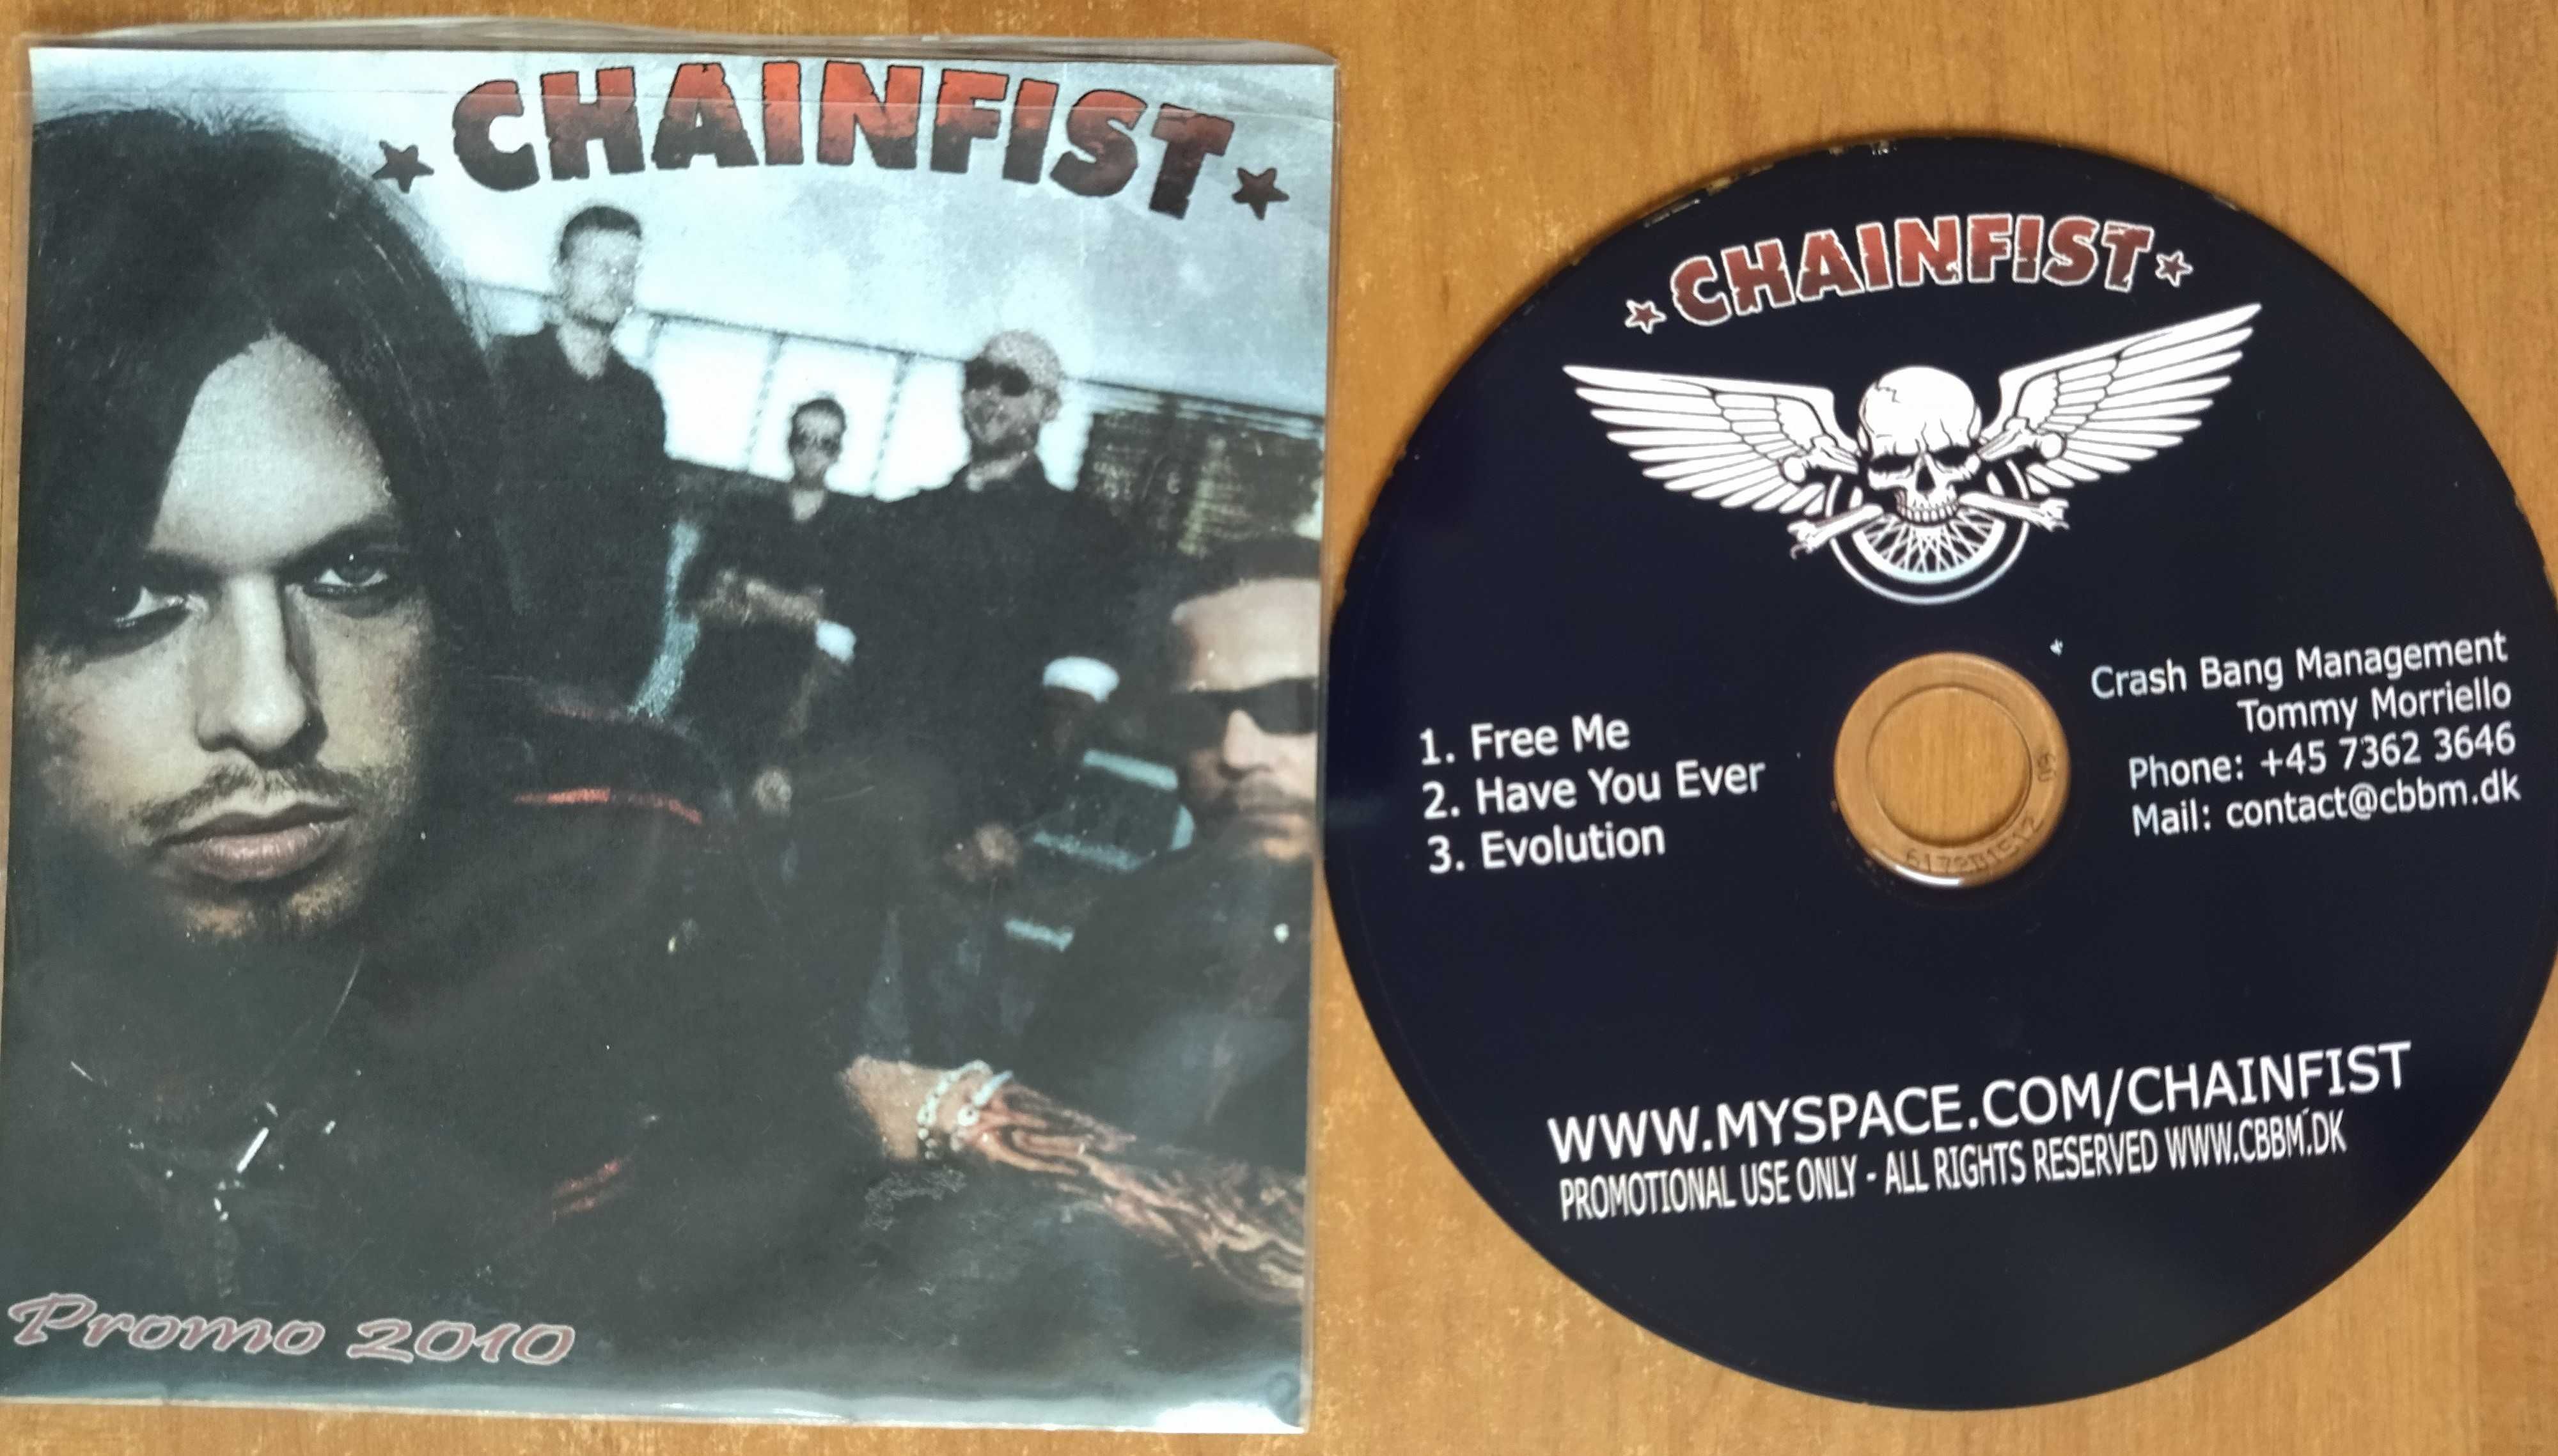 Chainfist Promo 2010 CD